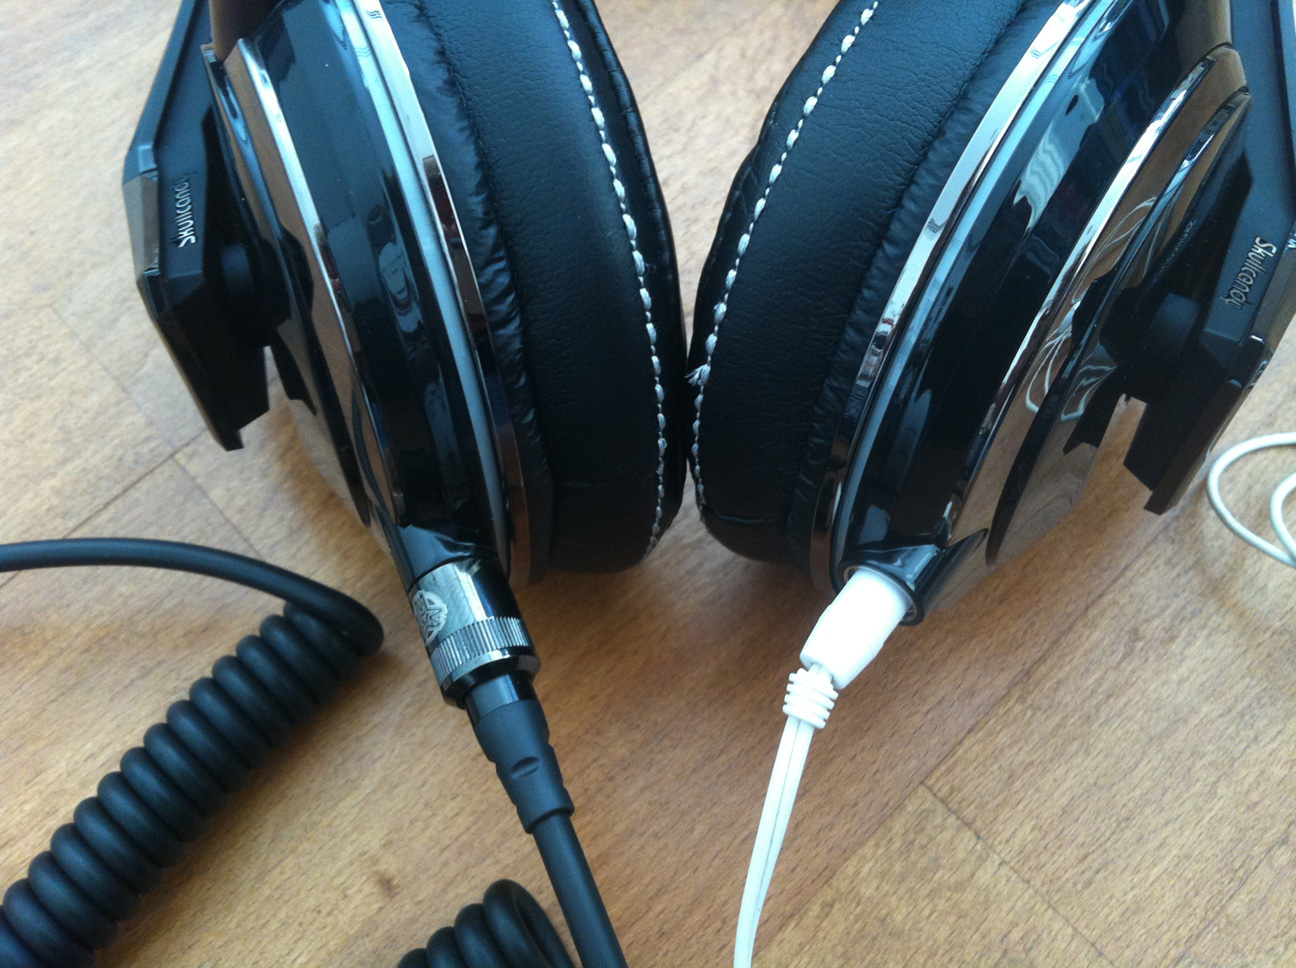 Review: Skullcandy Mix Master Mike DJ Headphones